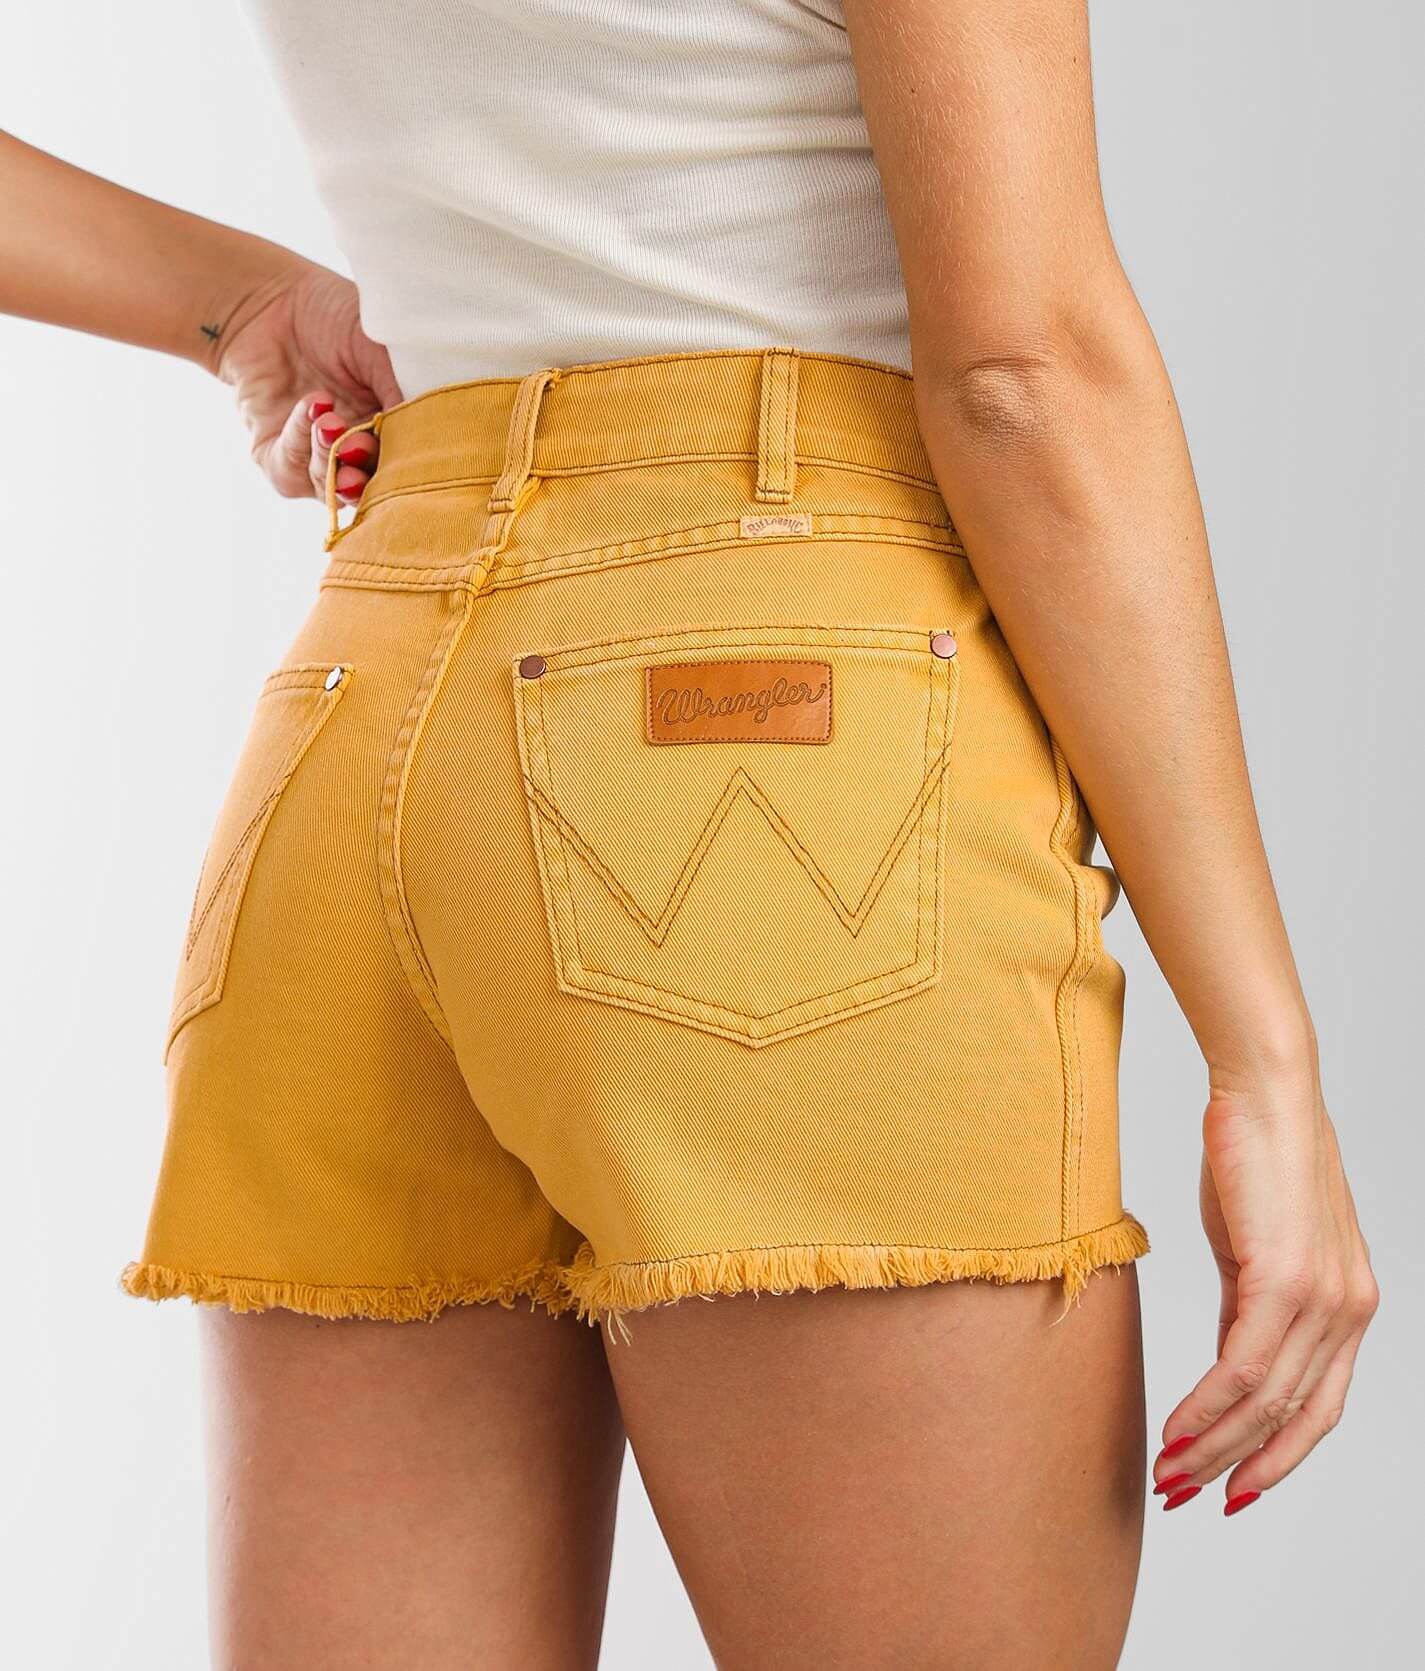 Billabong x Wrangler® Showdown Cut-Off Short - Women's Shorts in Dandelion  | Buckle